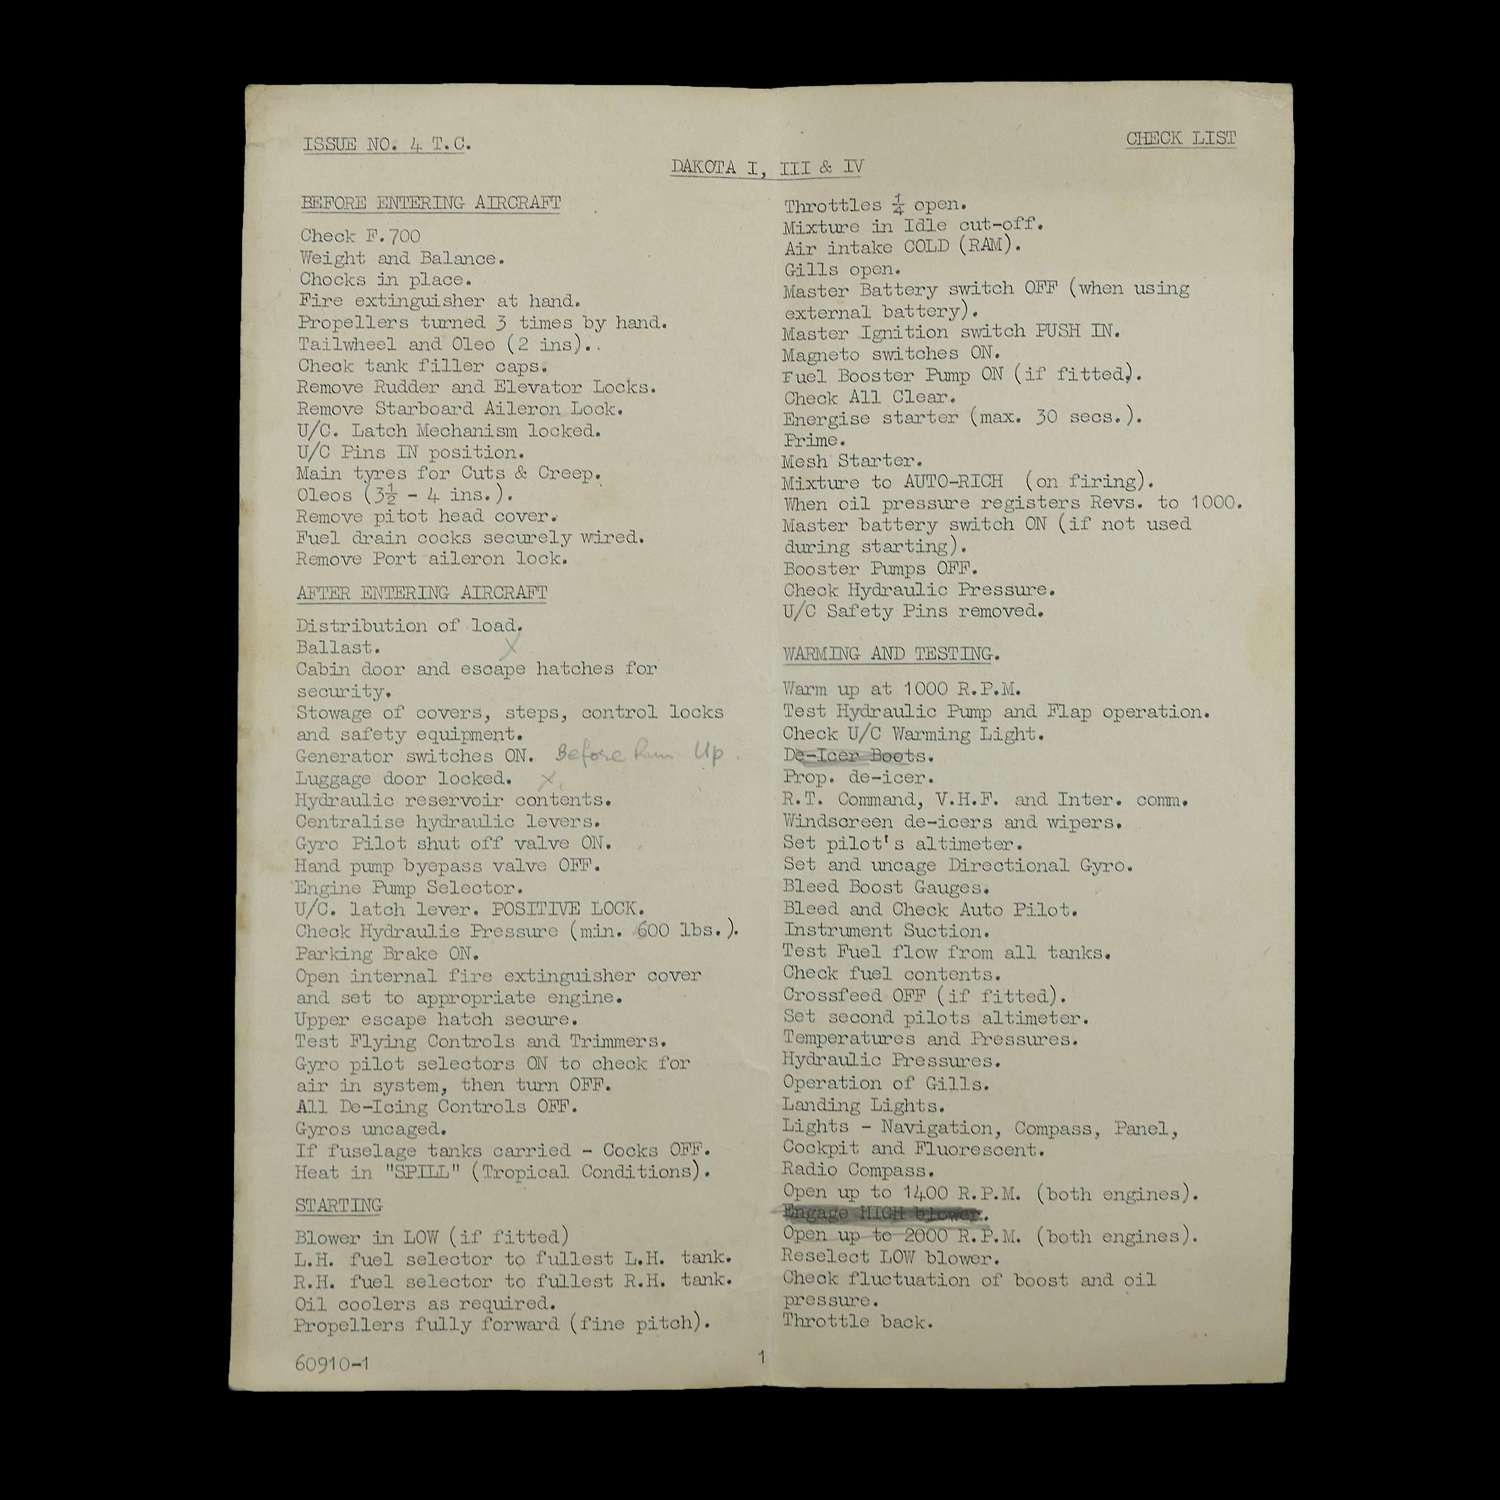 RAF Dakota I, III & IV check list, c1946